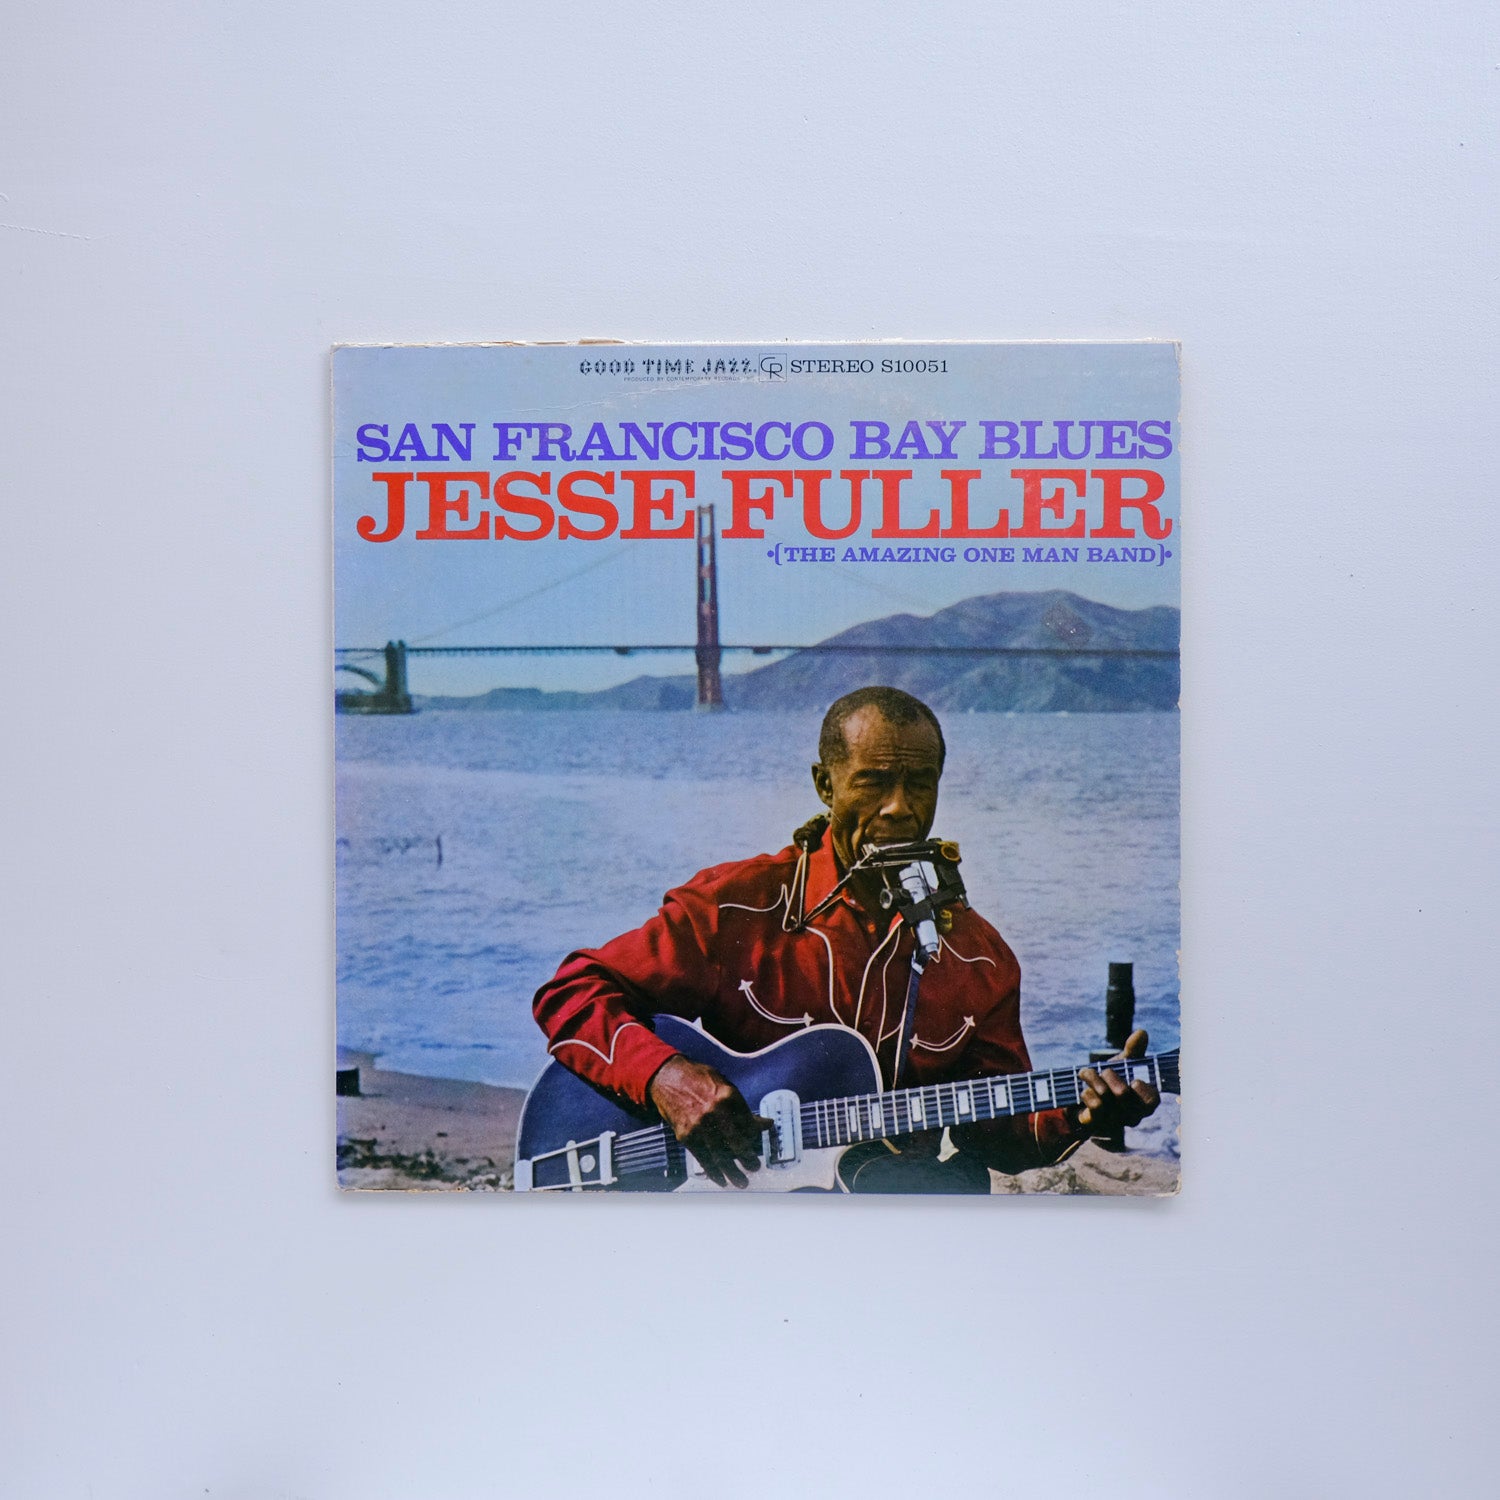 Jesse Fuller - San Francisco Bay Blues